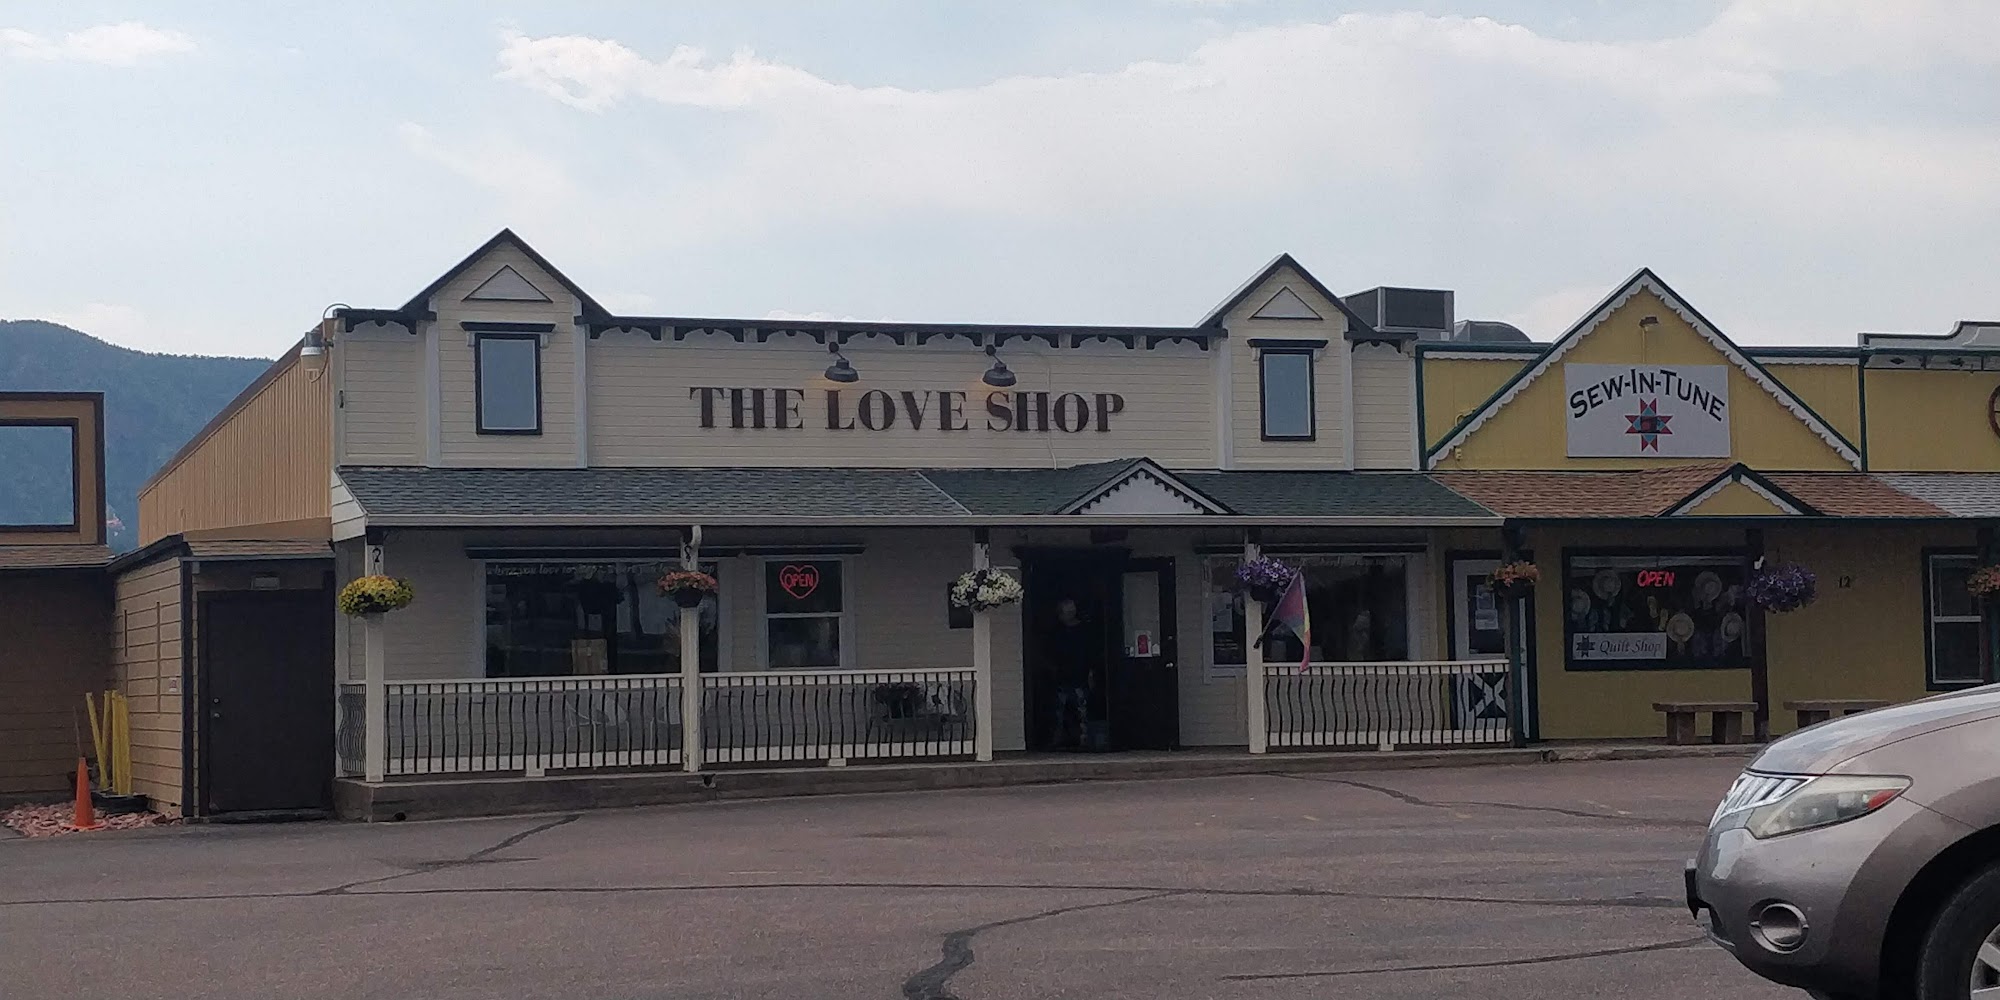 The Love Shop